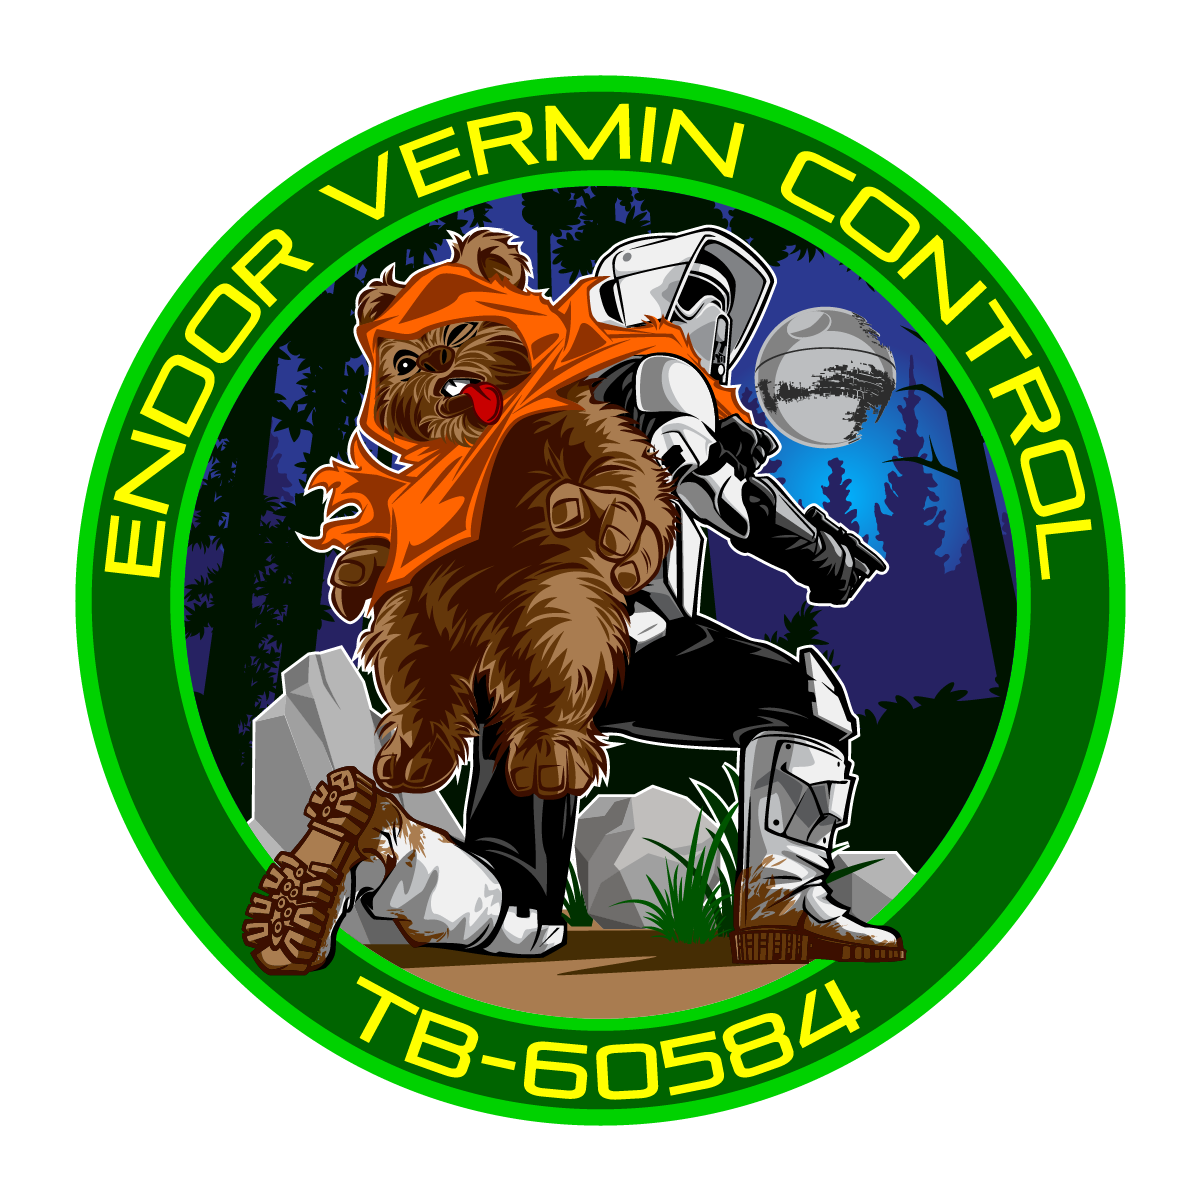 Endor Vermin Control